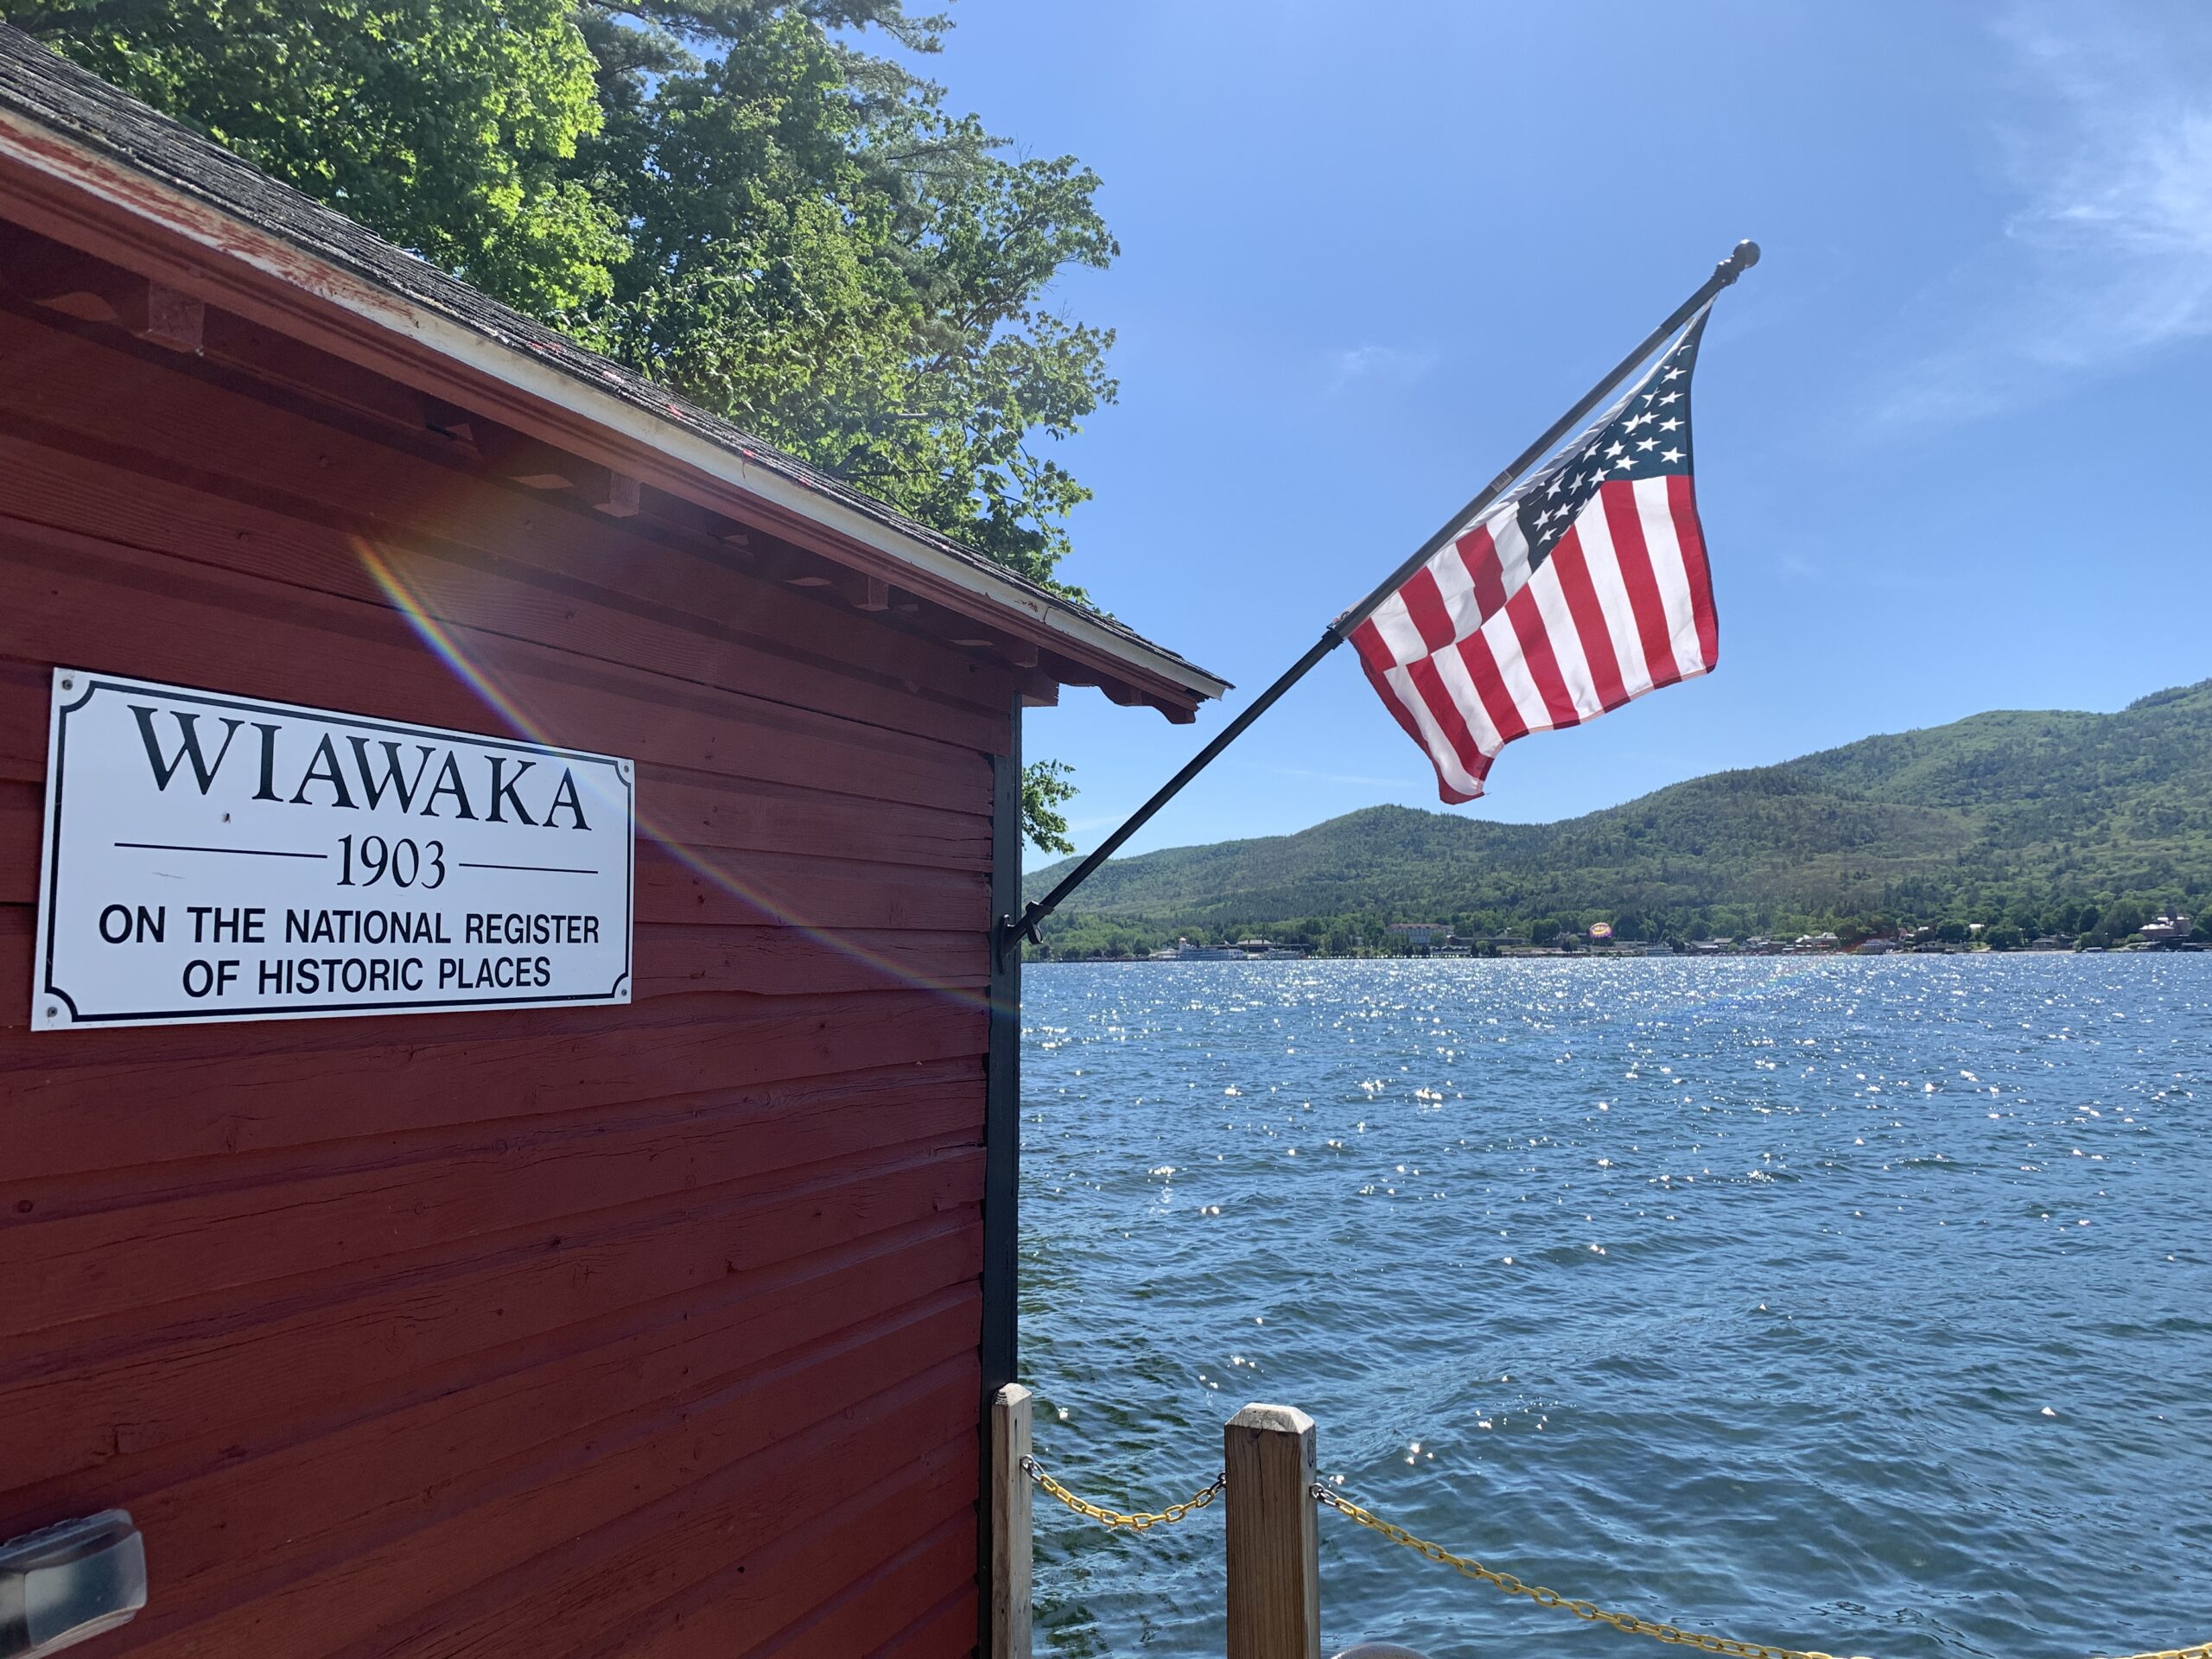 Wiawaka Center for Women, dock on Lake George